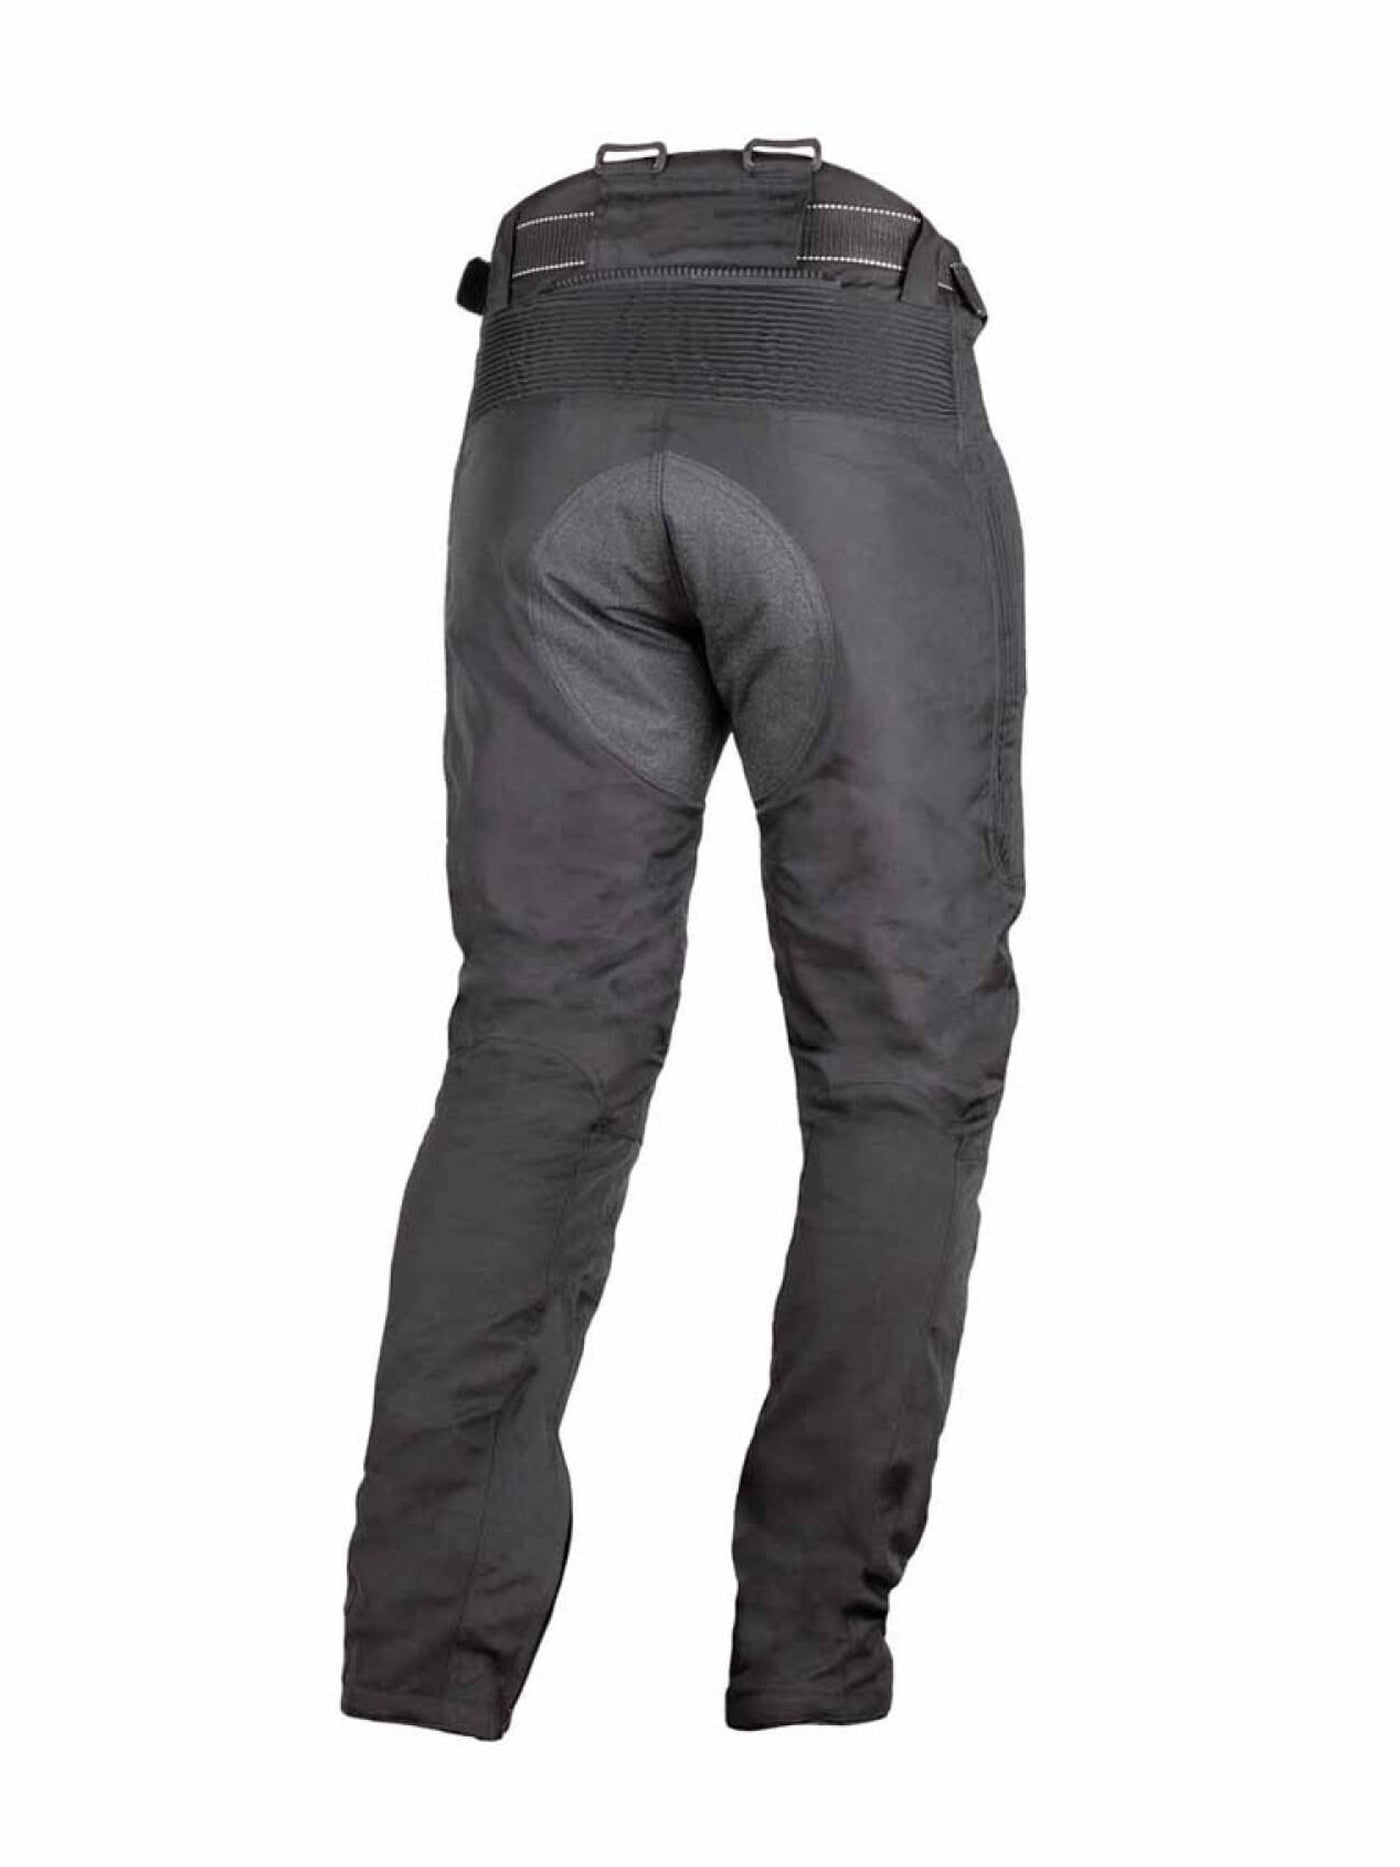 Pantalones para moto GMS Tour highway II negro - procircuitcl